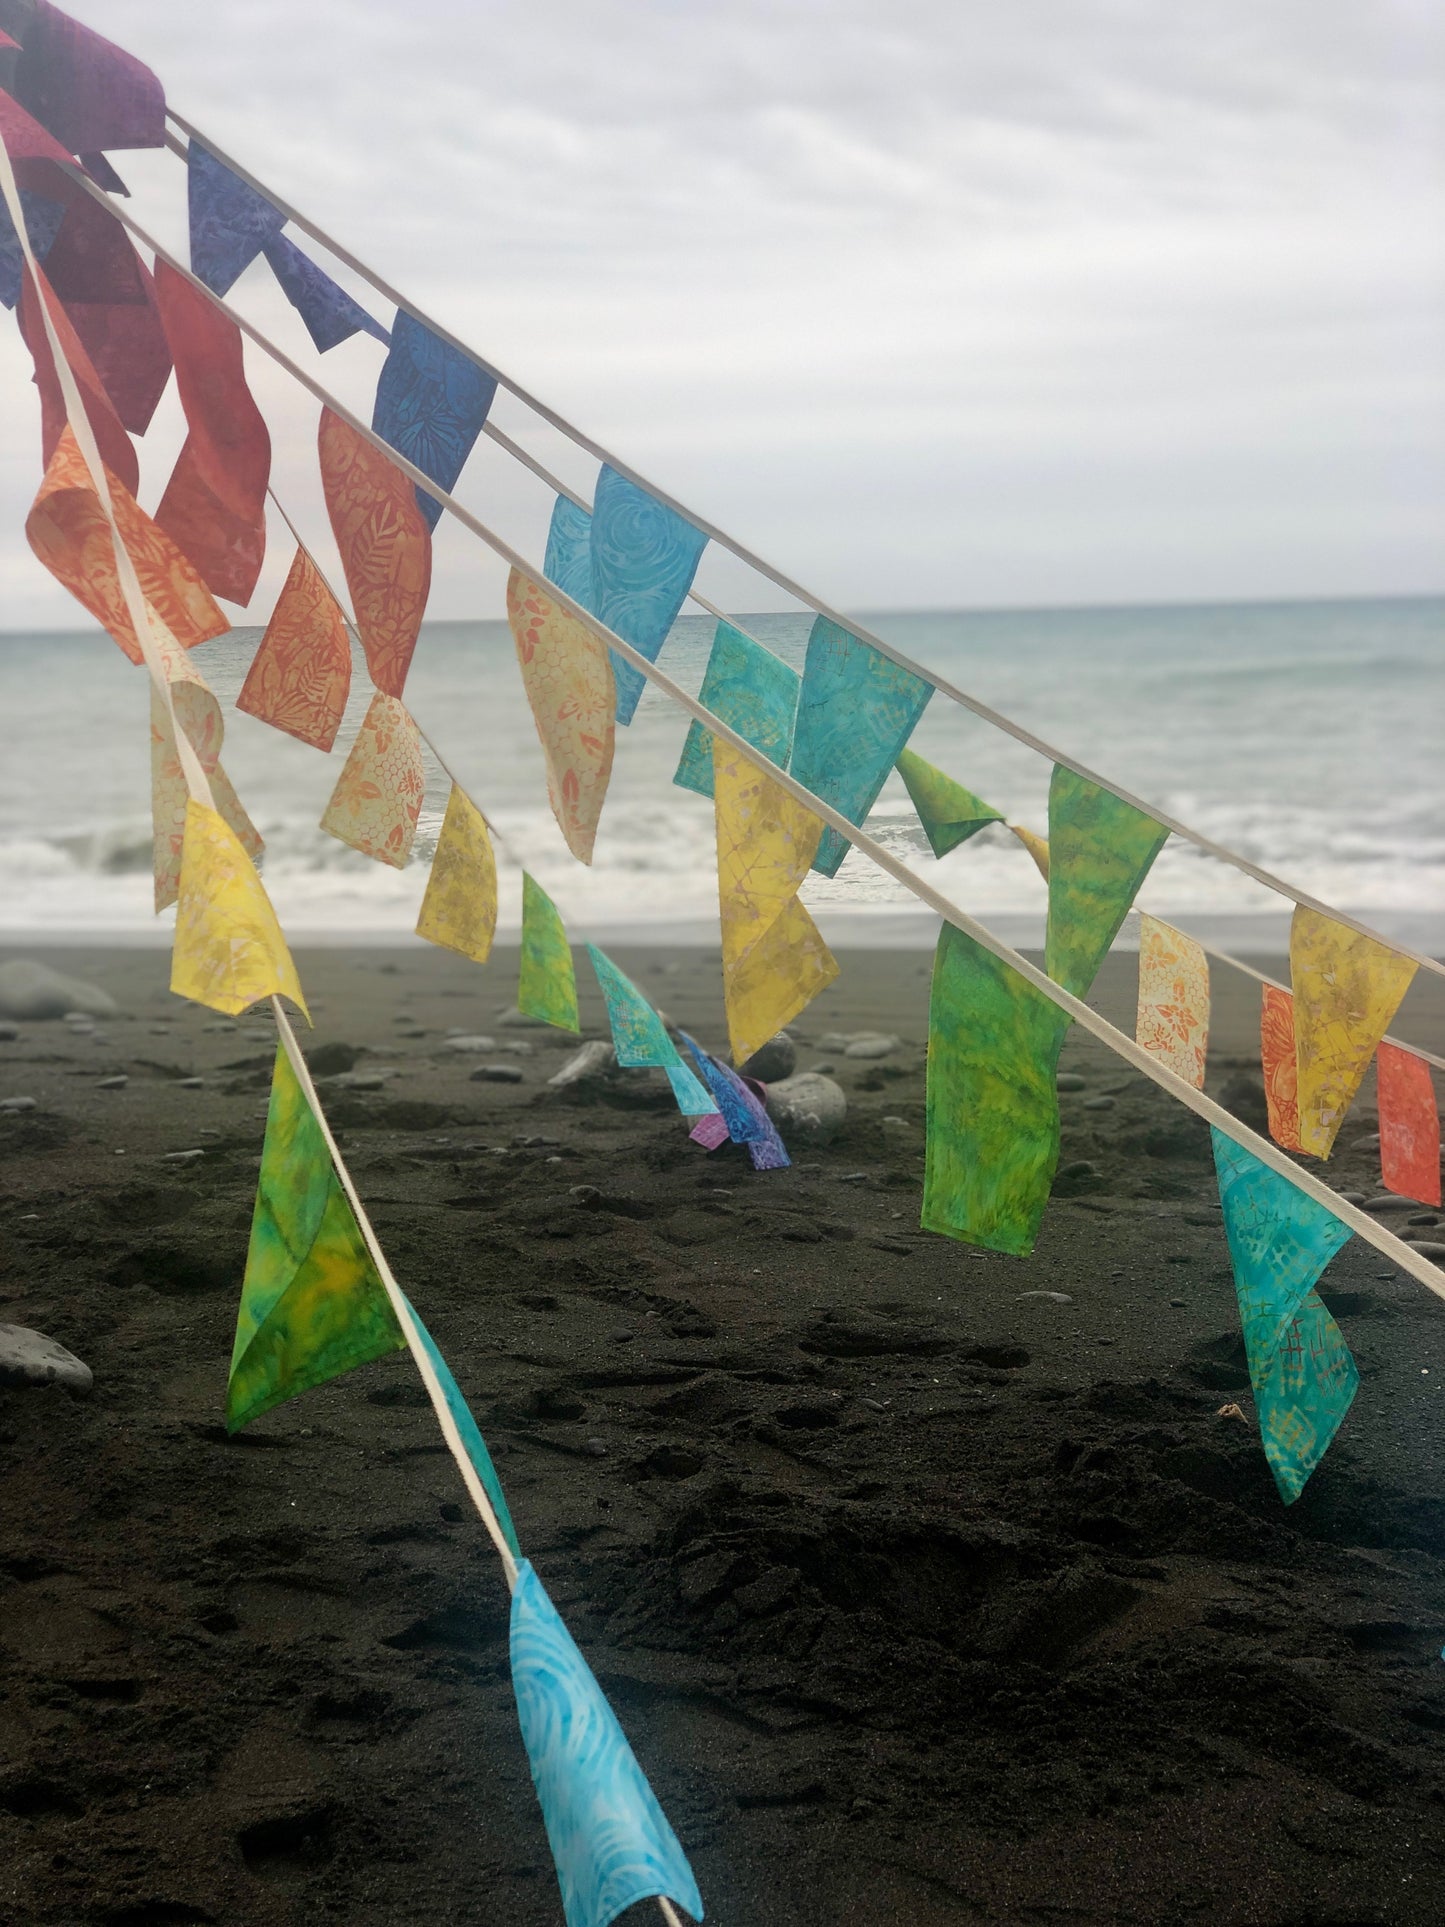 rainbow bunting flags are draped to create a tibetan prayer flag display on the beach